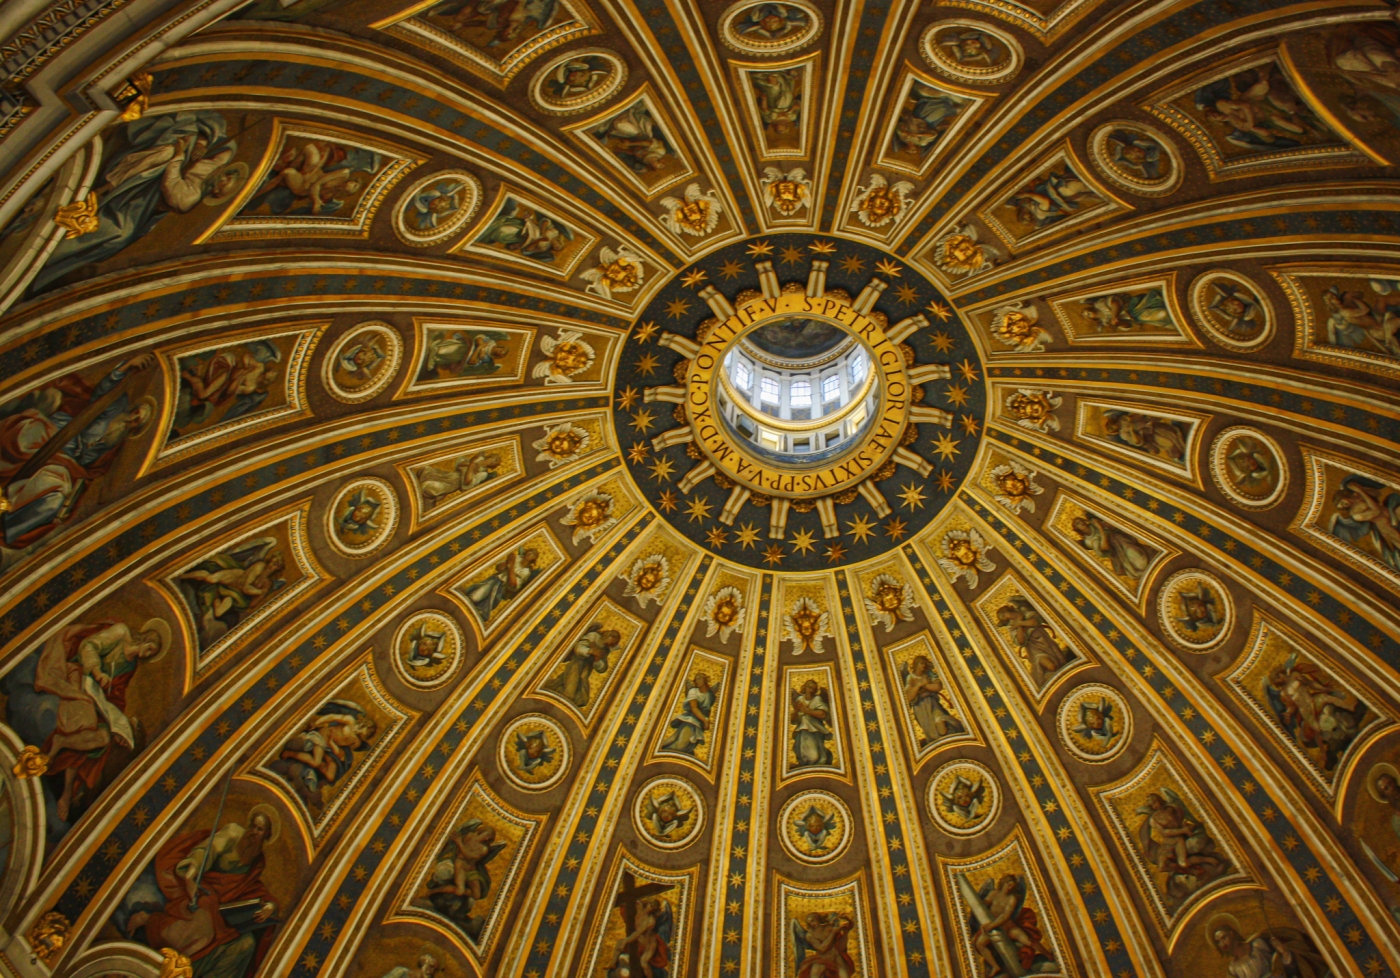 Dome of St. Peter's Basillica by Pamela Carter